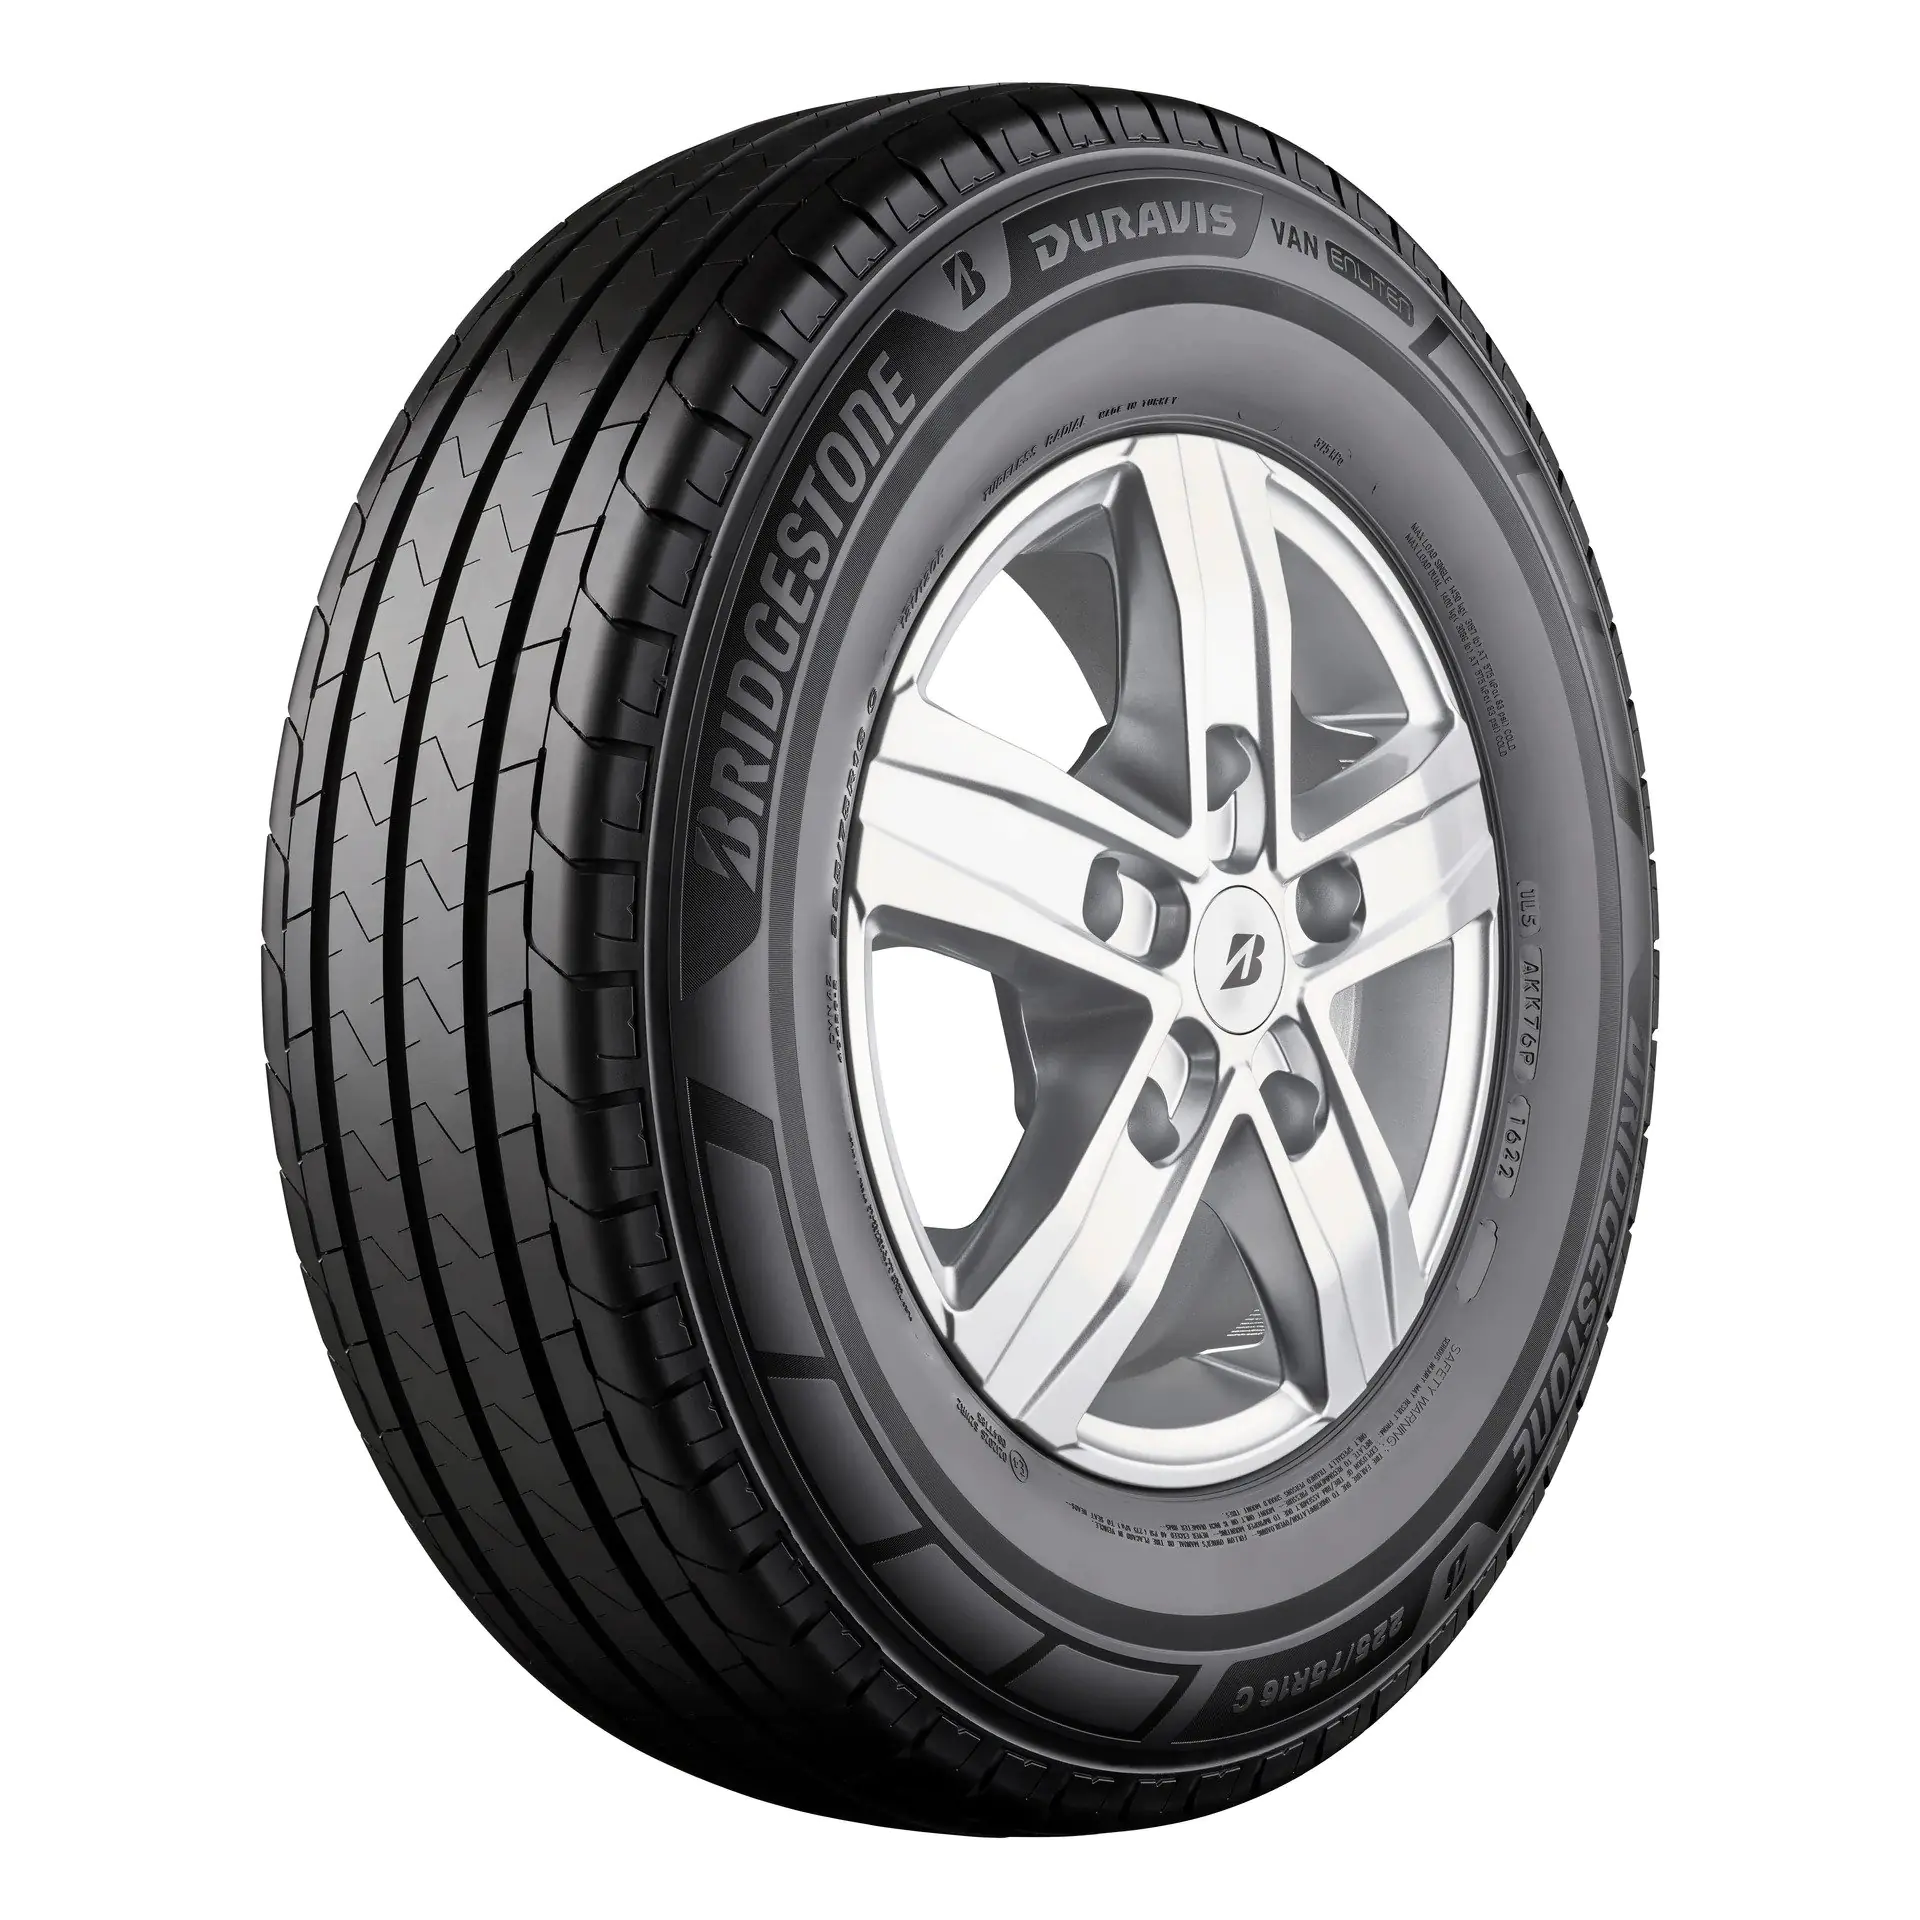 Bridgestone Bridgestone 235/65 R16C 115/113R DURAVIS VAN pneumatici nuovi Estivo 